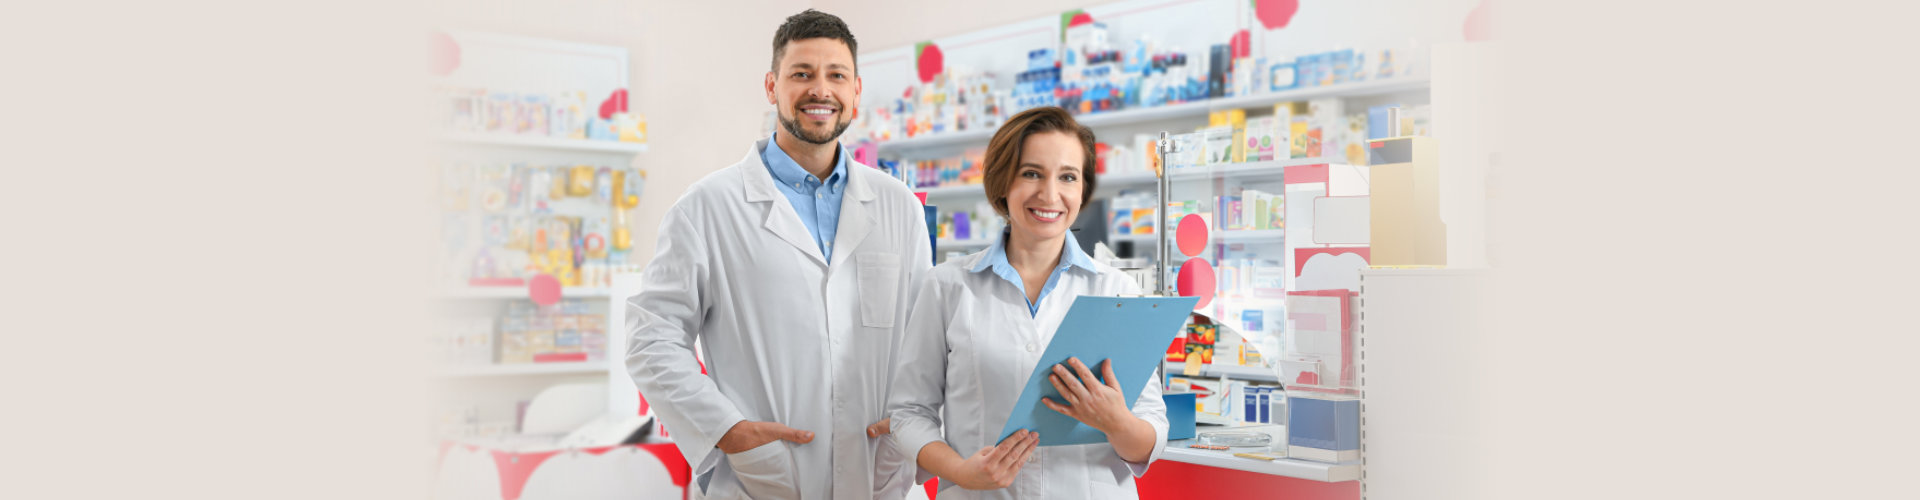 professional pharmacists in modern drugstore